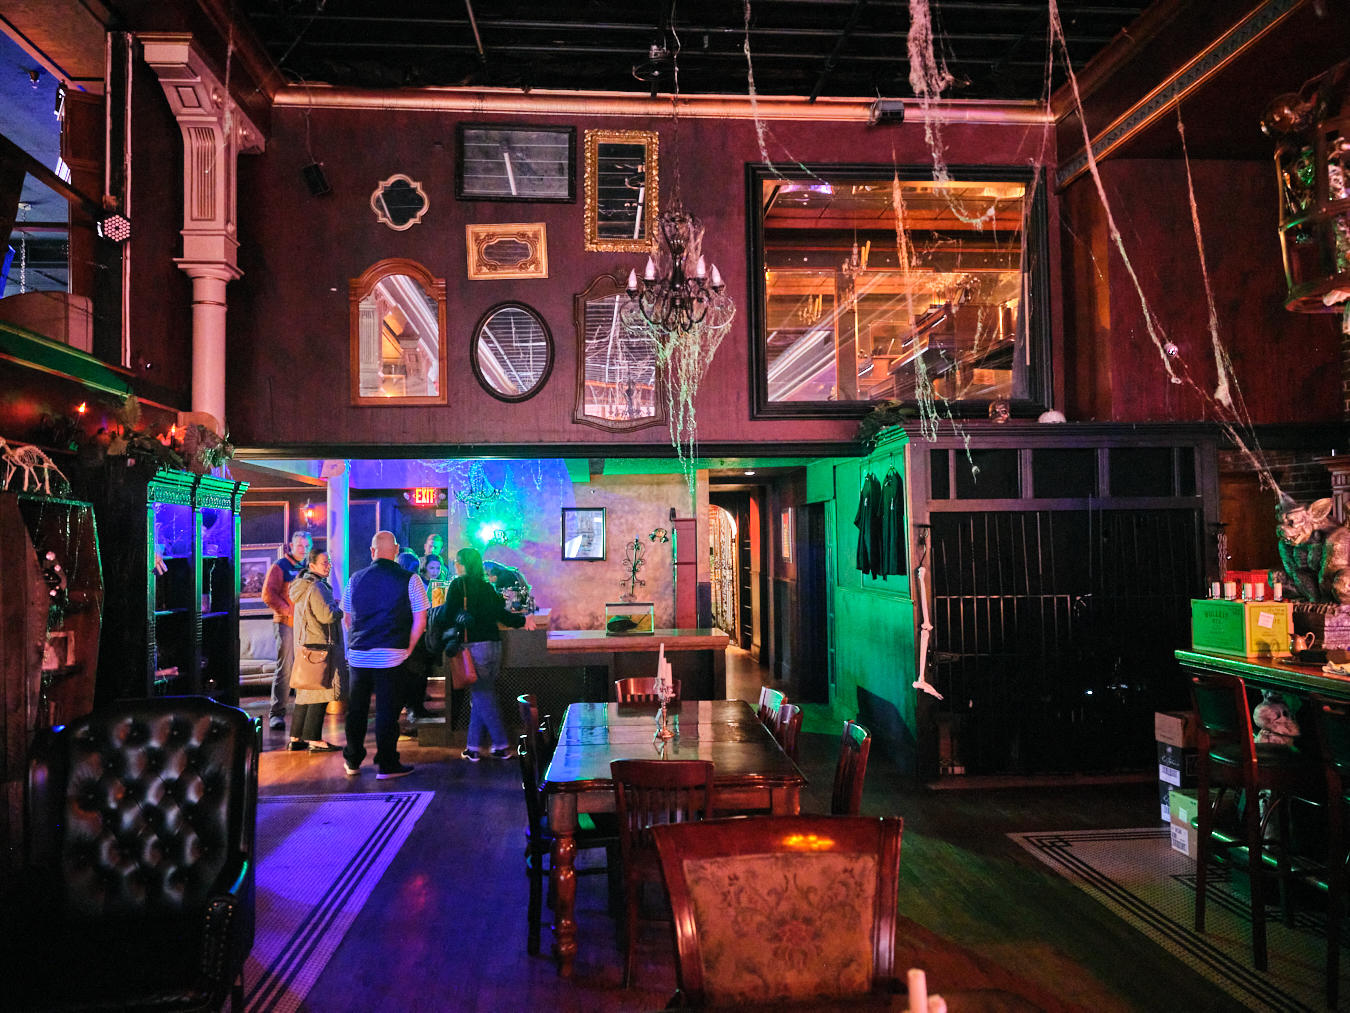 Ravens Manor Haunted Mansion Themed Bar